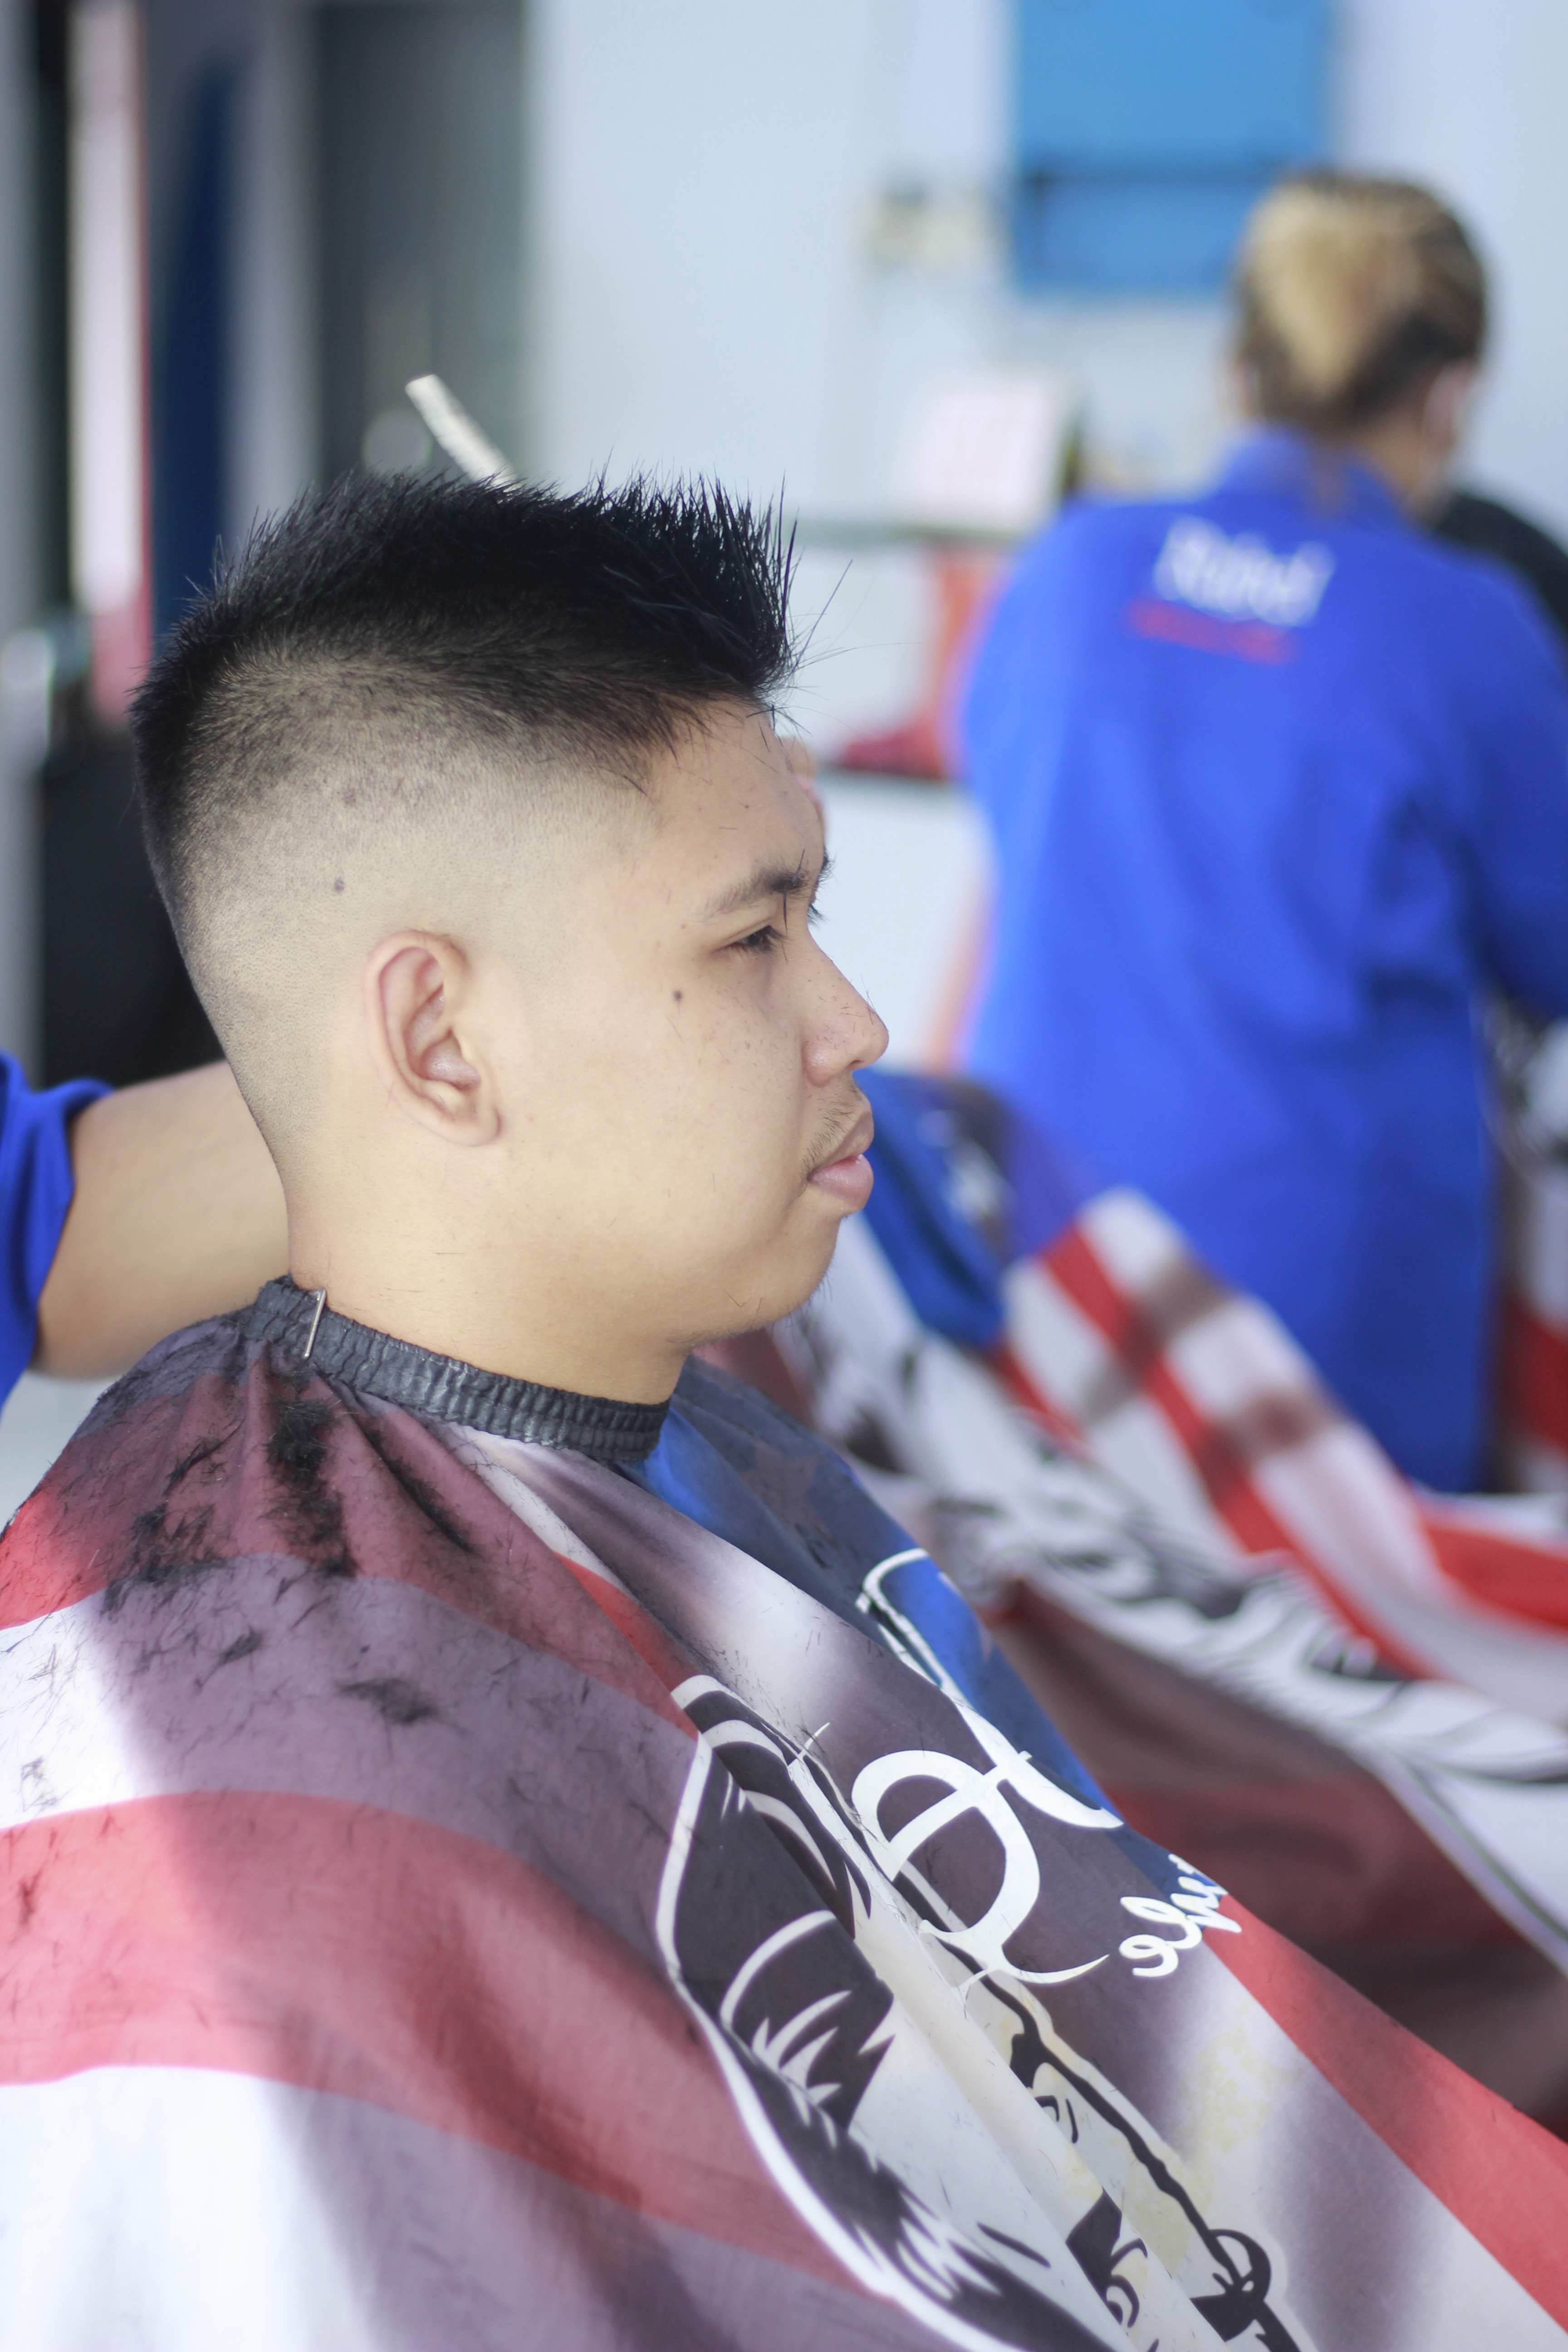 Harga Barbershop Di Kecamatan Kedungkandang Murah